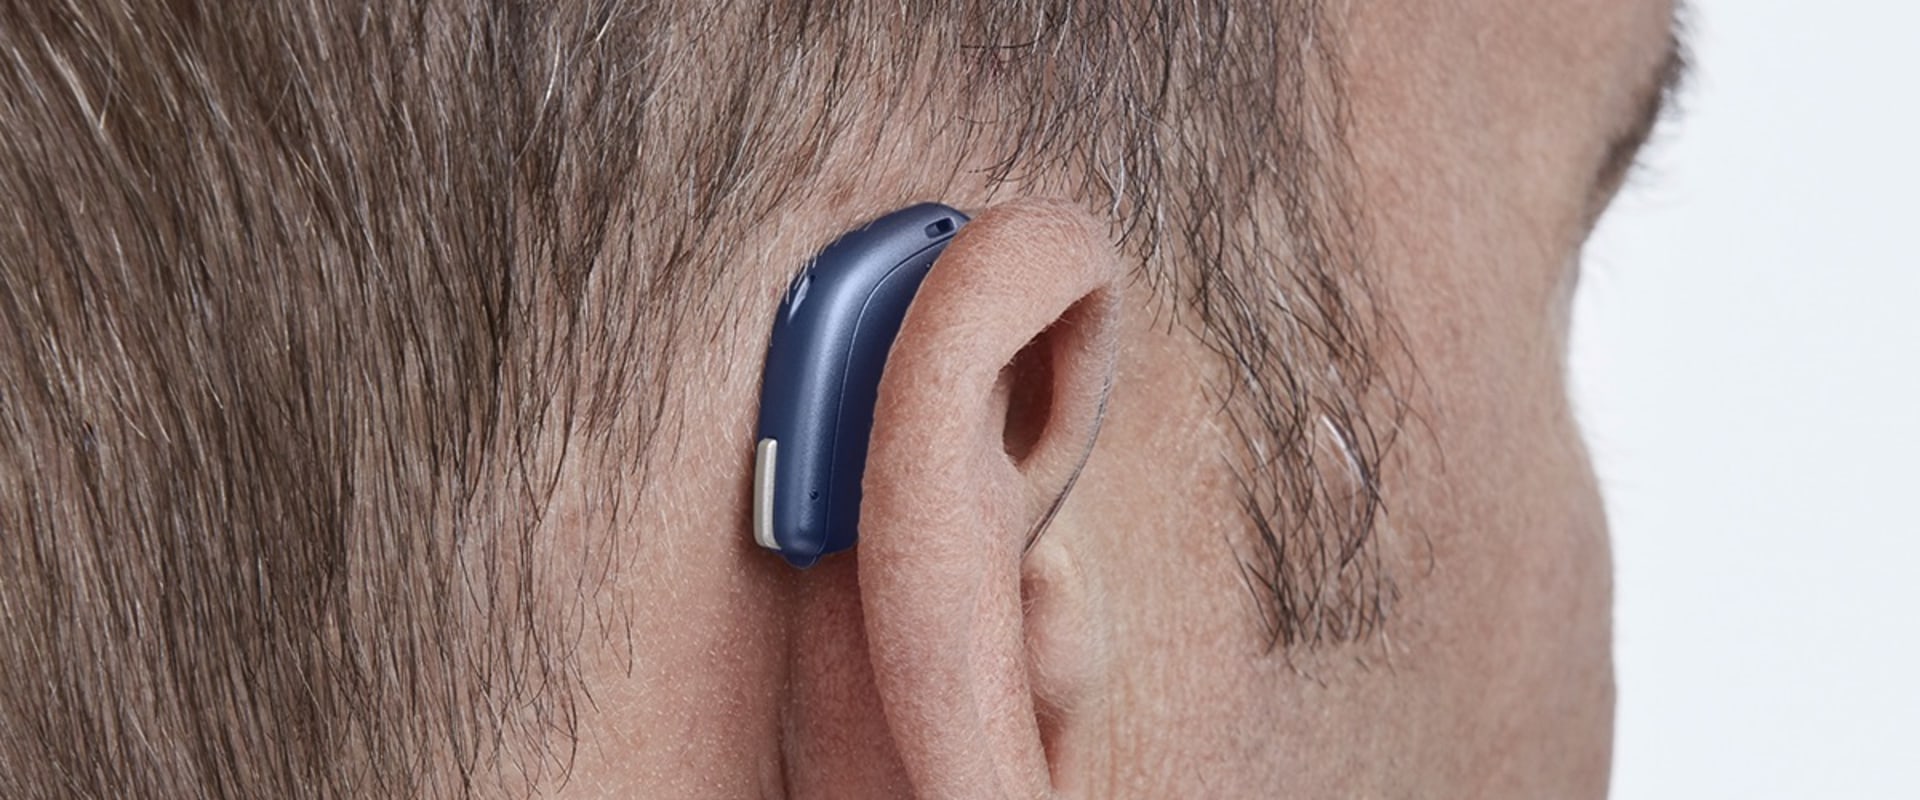 How long do costco hearing aids last?